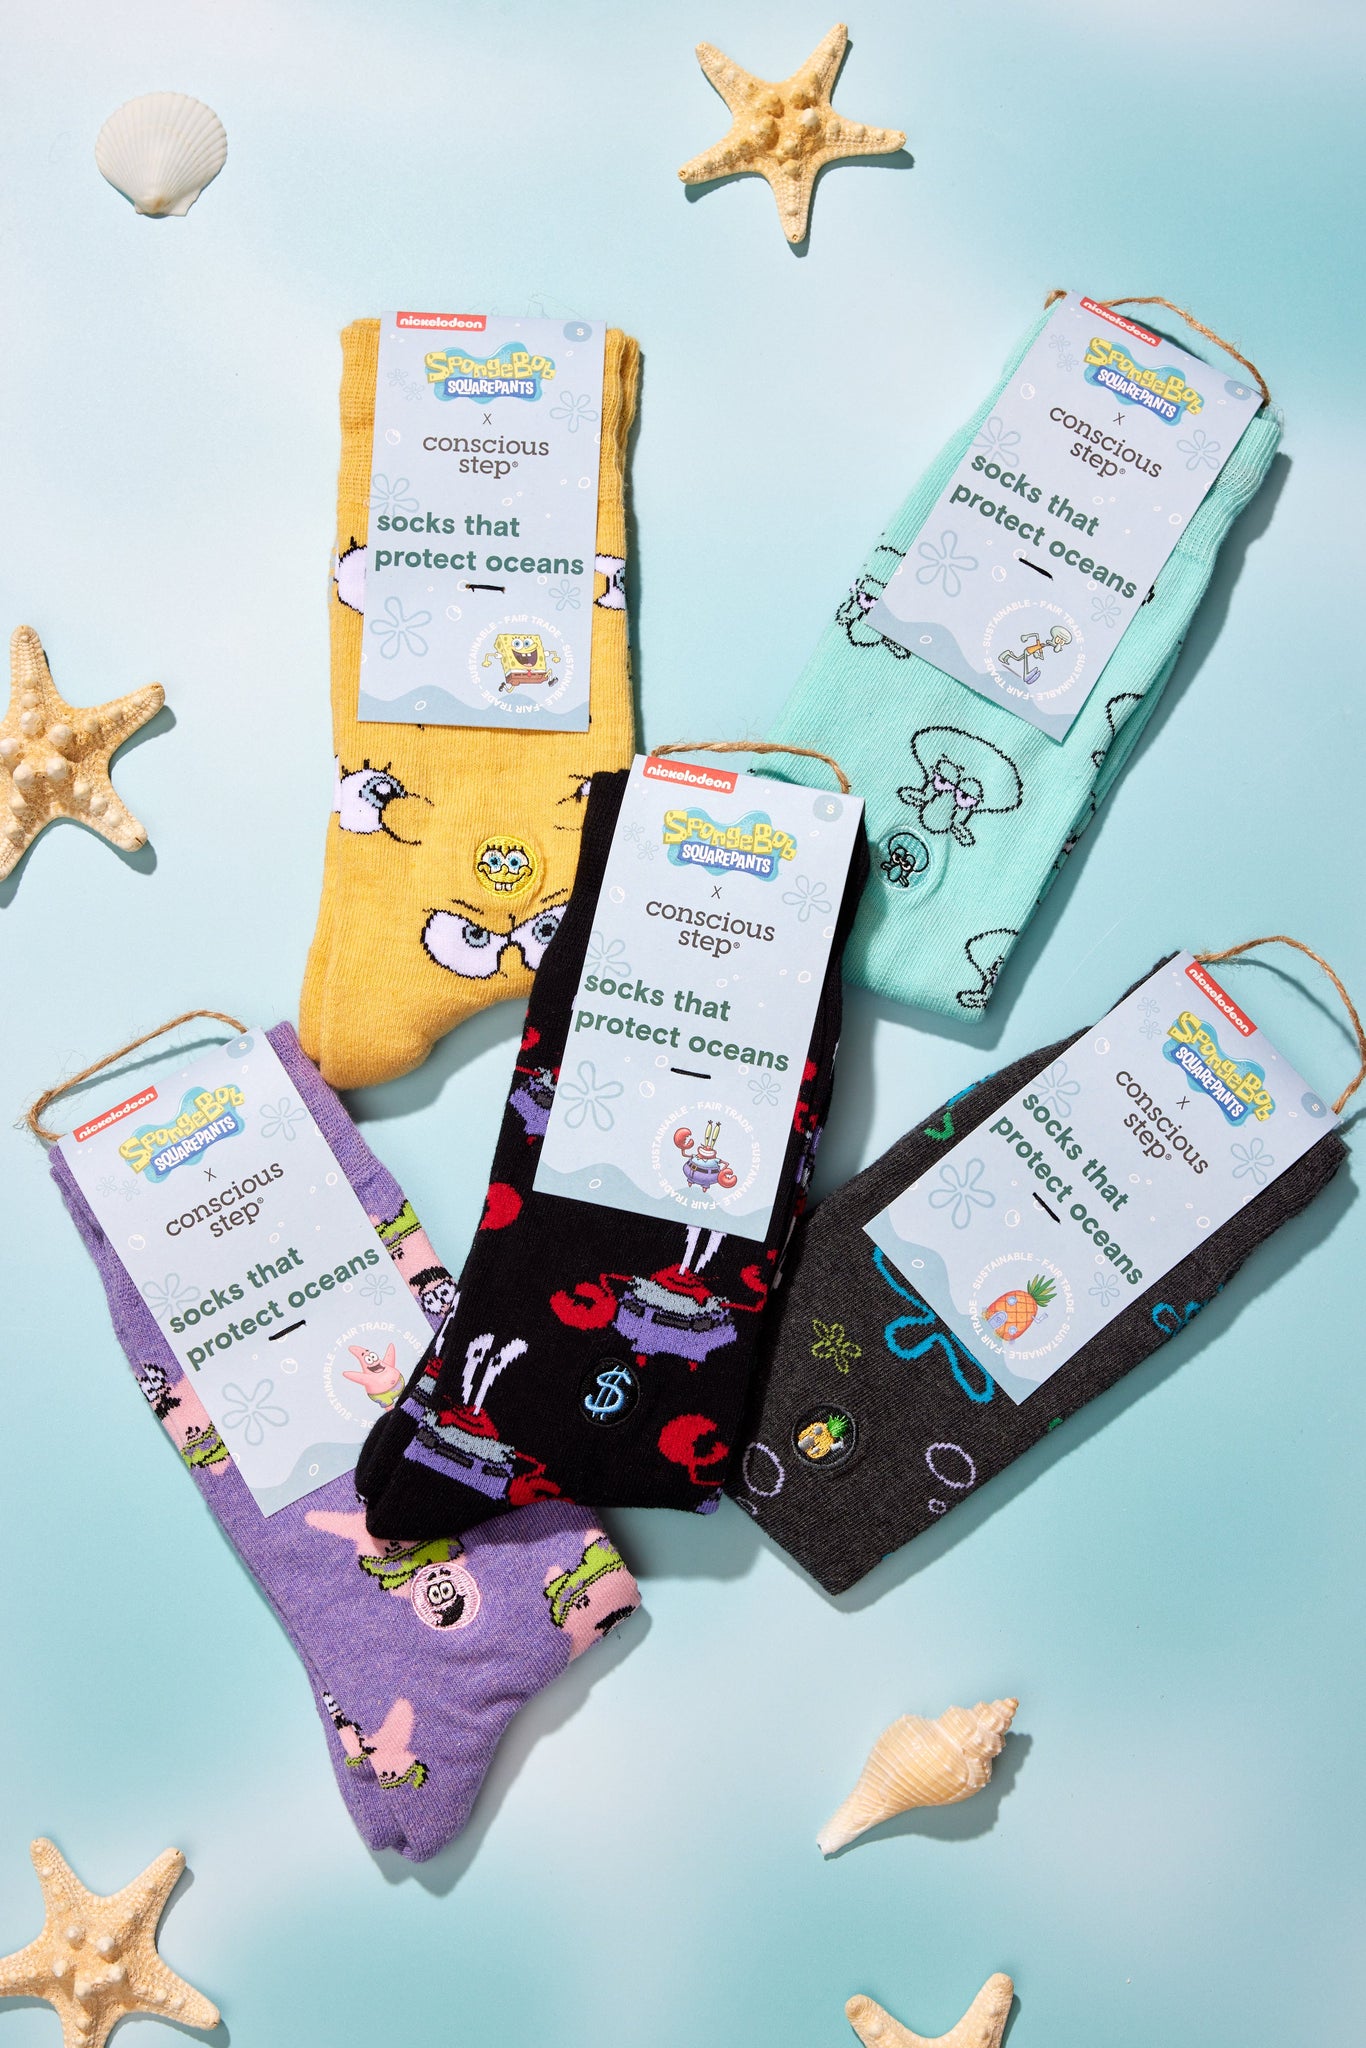 5 pairs of SpongeBob SquarePants Socks that Protect Oceans from Conscious Step.